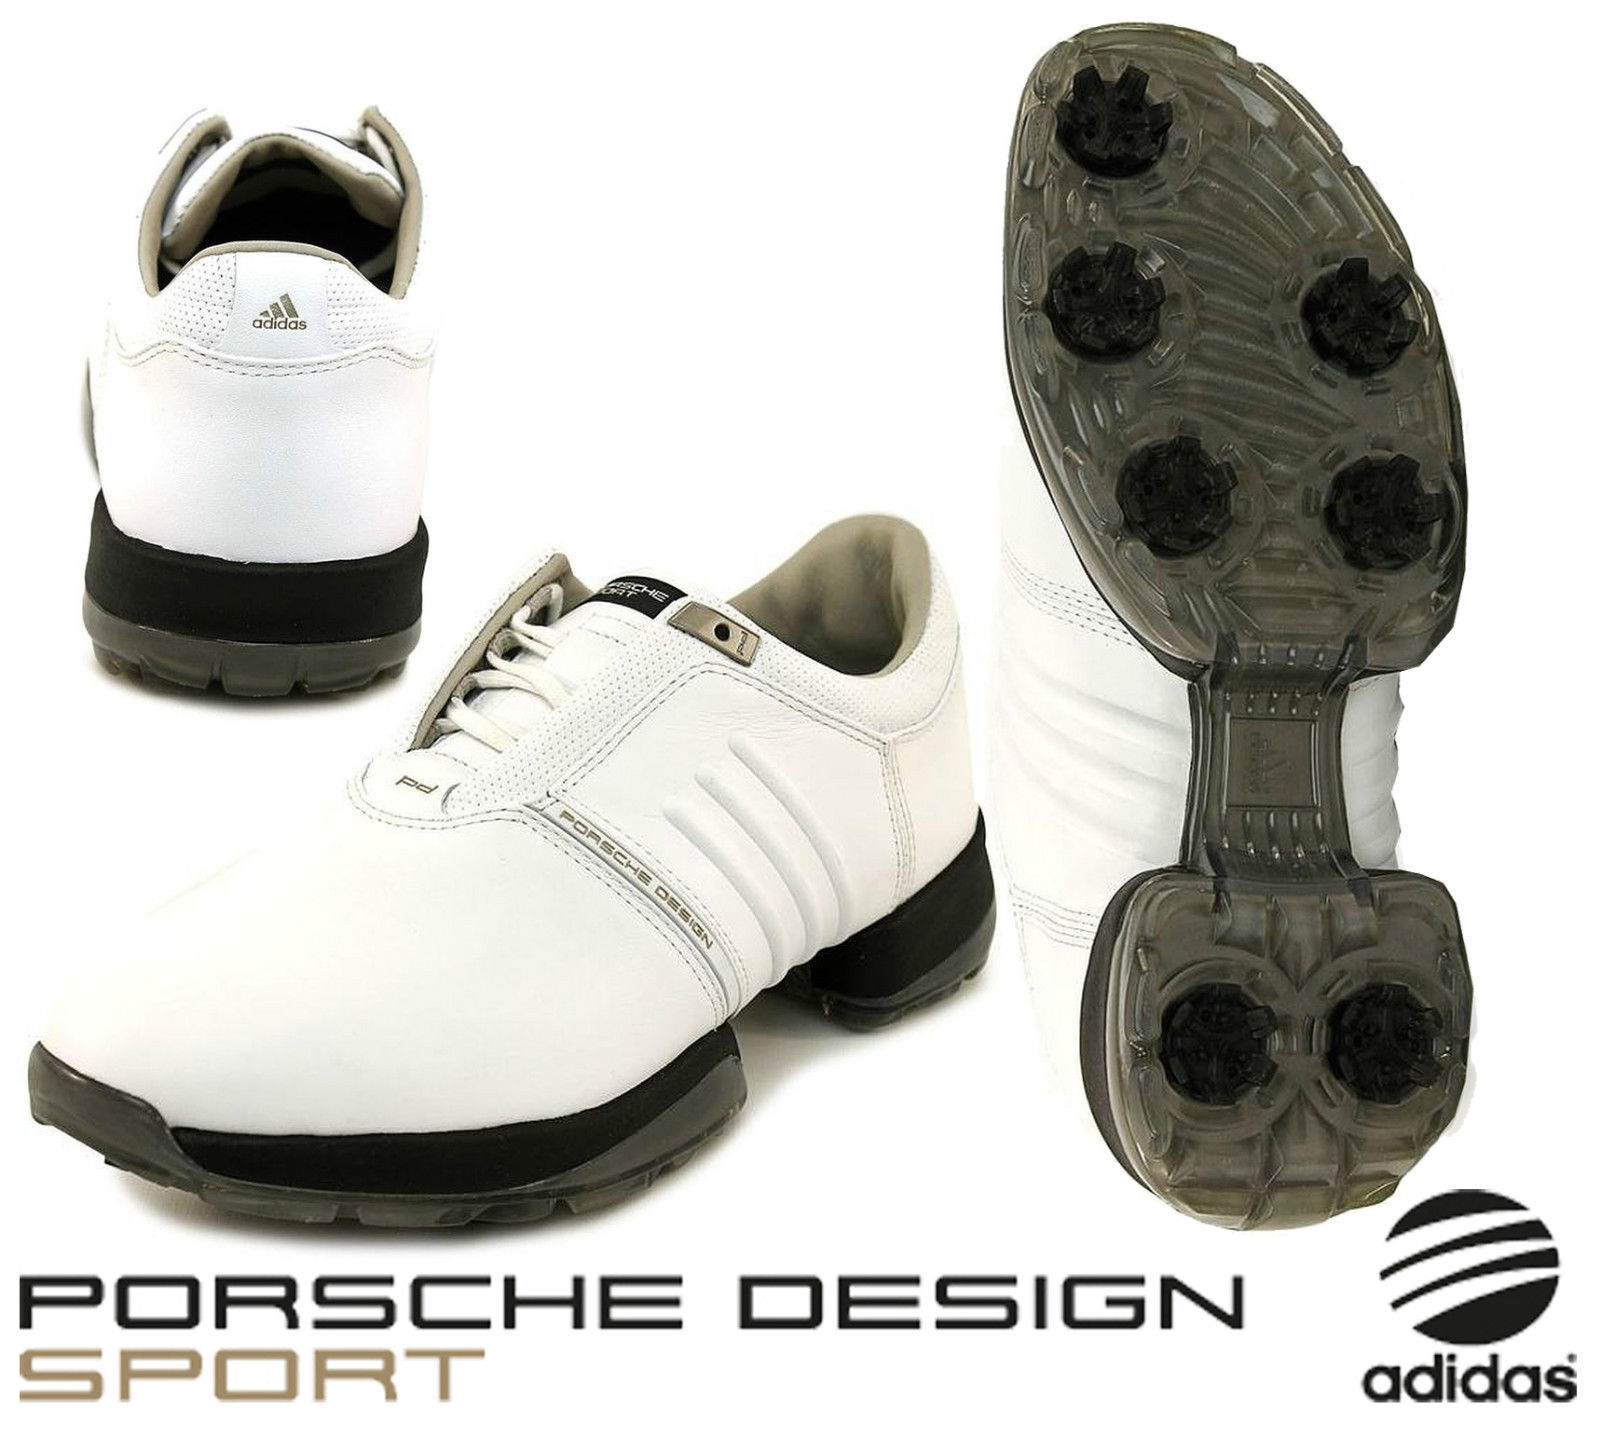 Adidas LTD Edition Porsche Design Tour Golf RRP£199 RARE UK6.5 - UK13.5 - Trousers Clothing